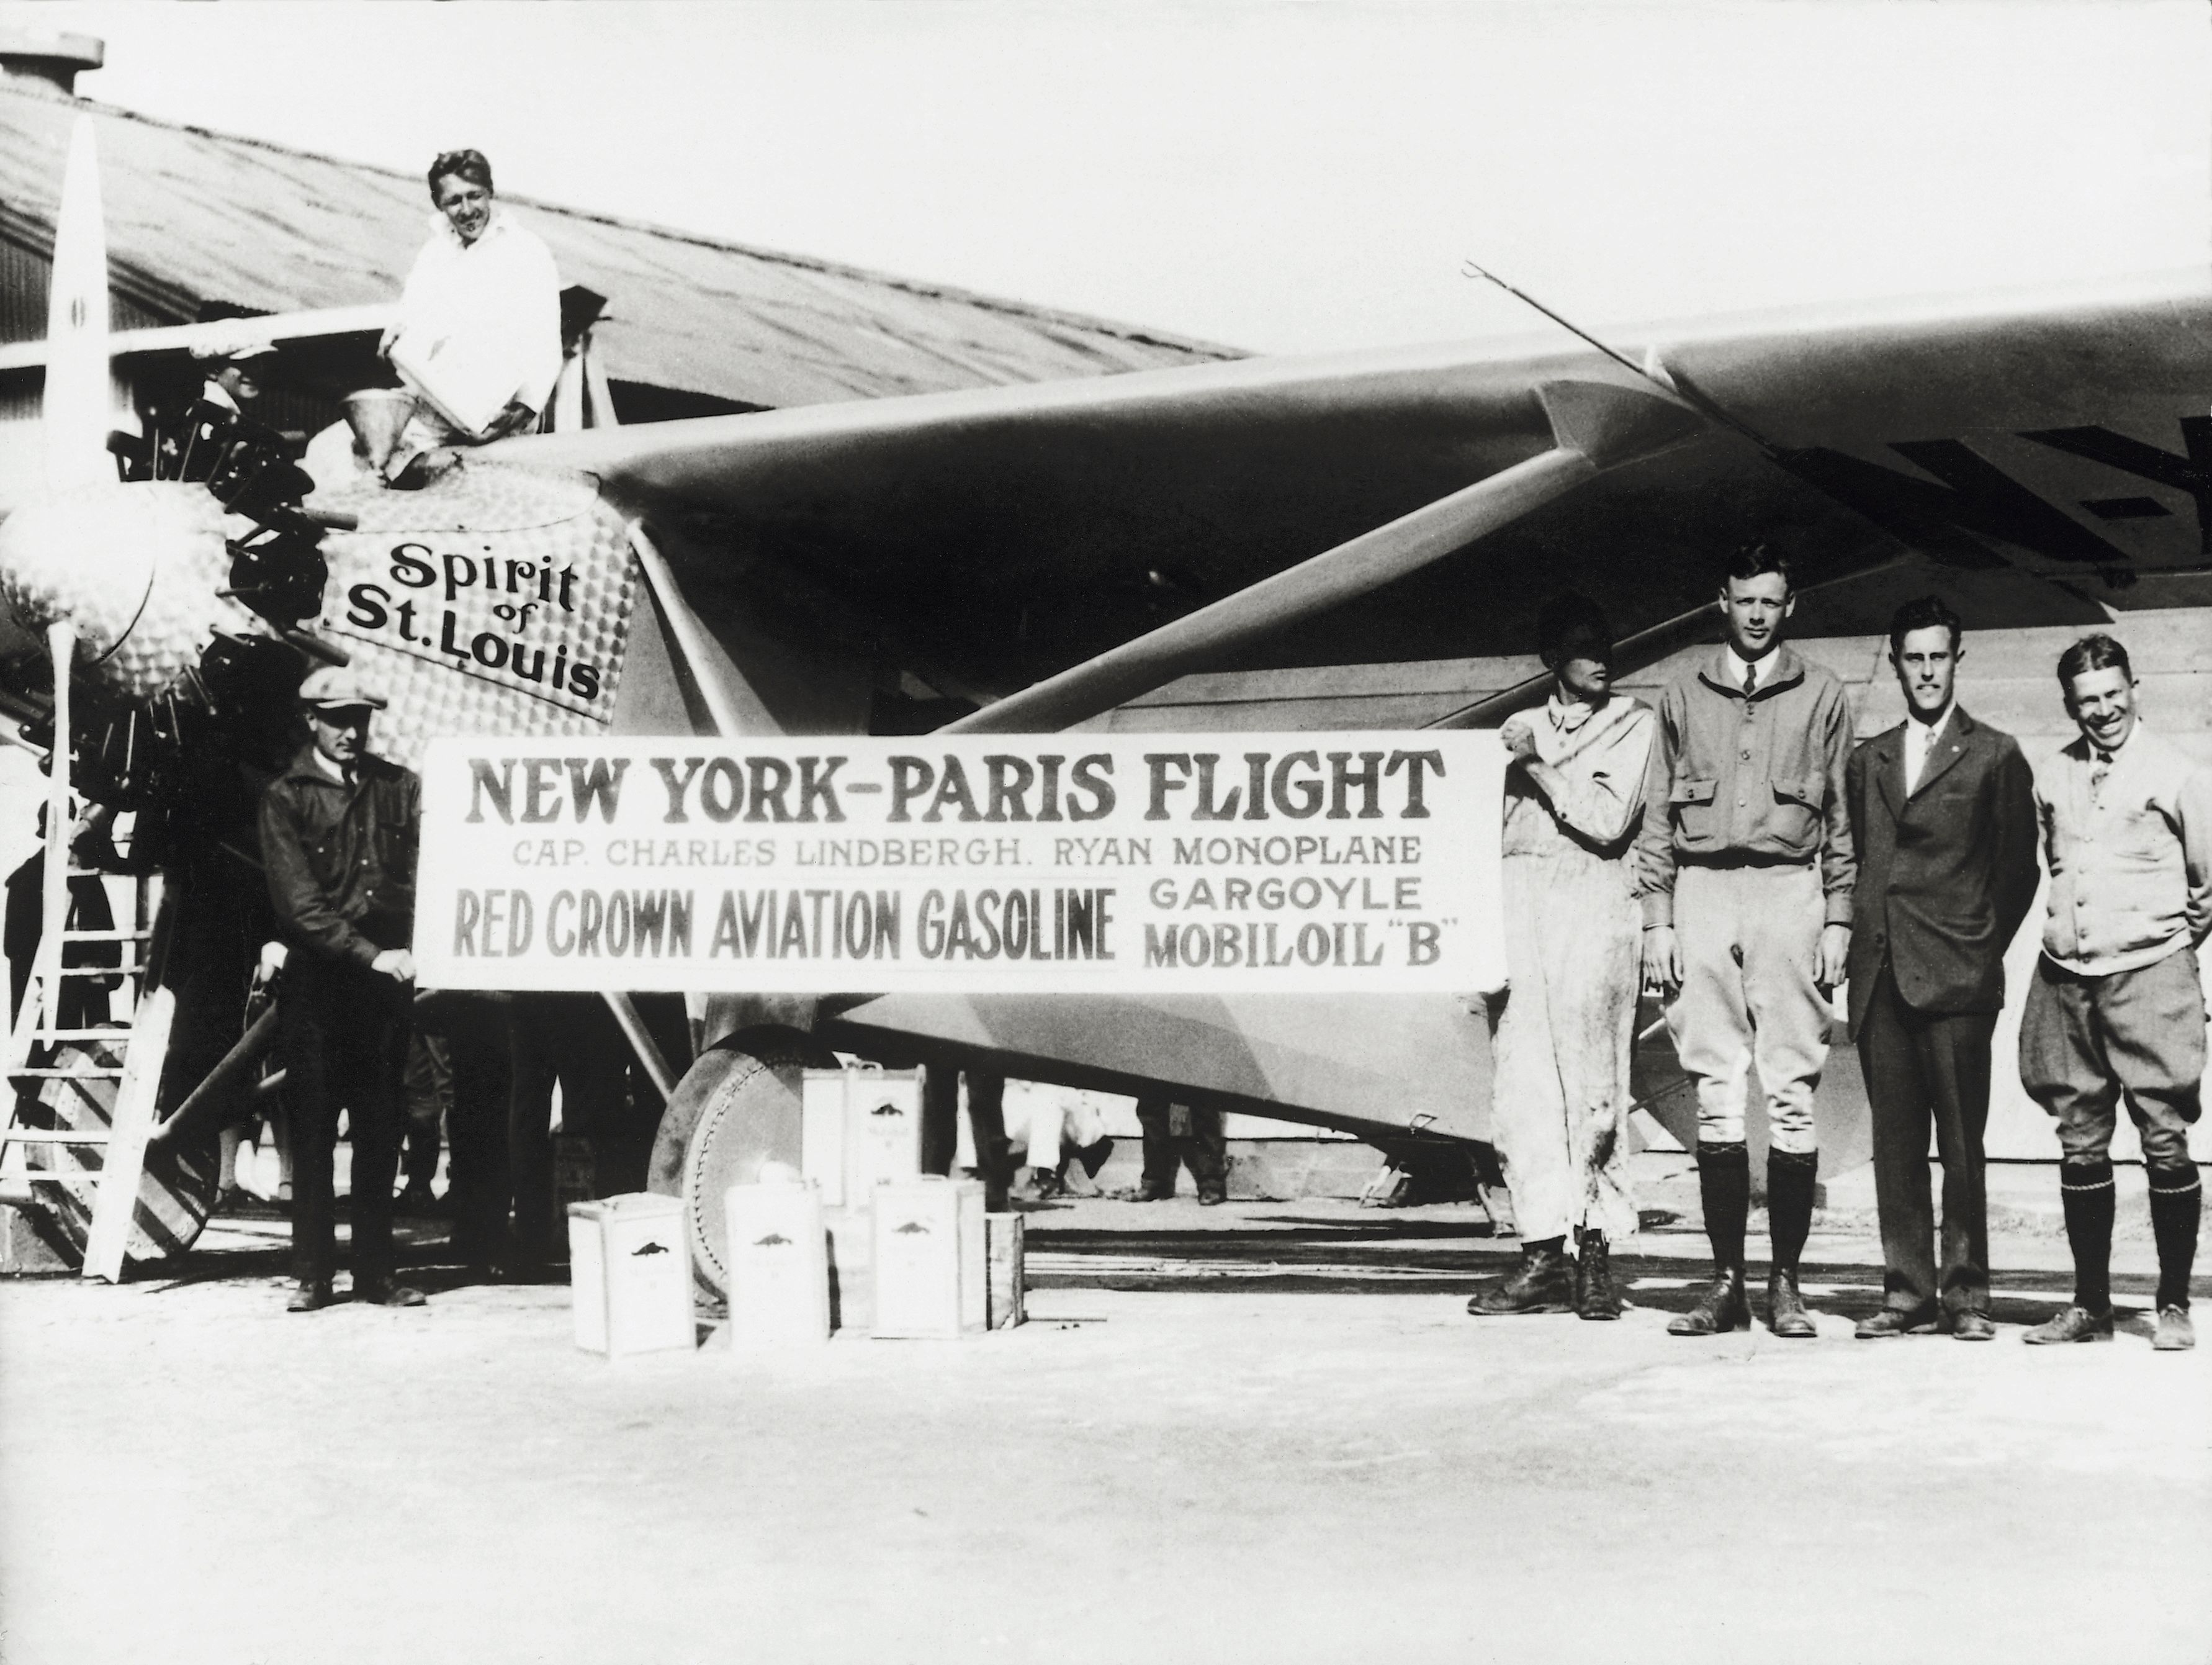 Charles Lindbergh and Ryan 'Spirit of St Louis' monoplane